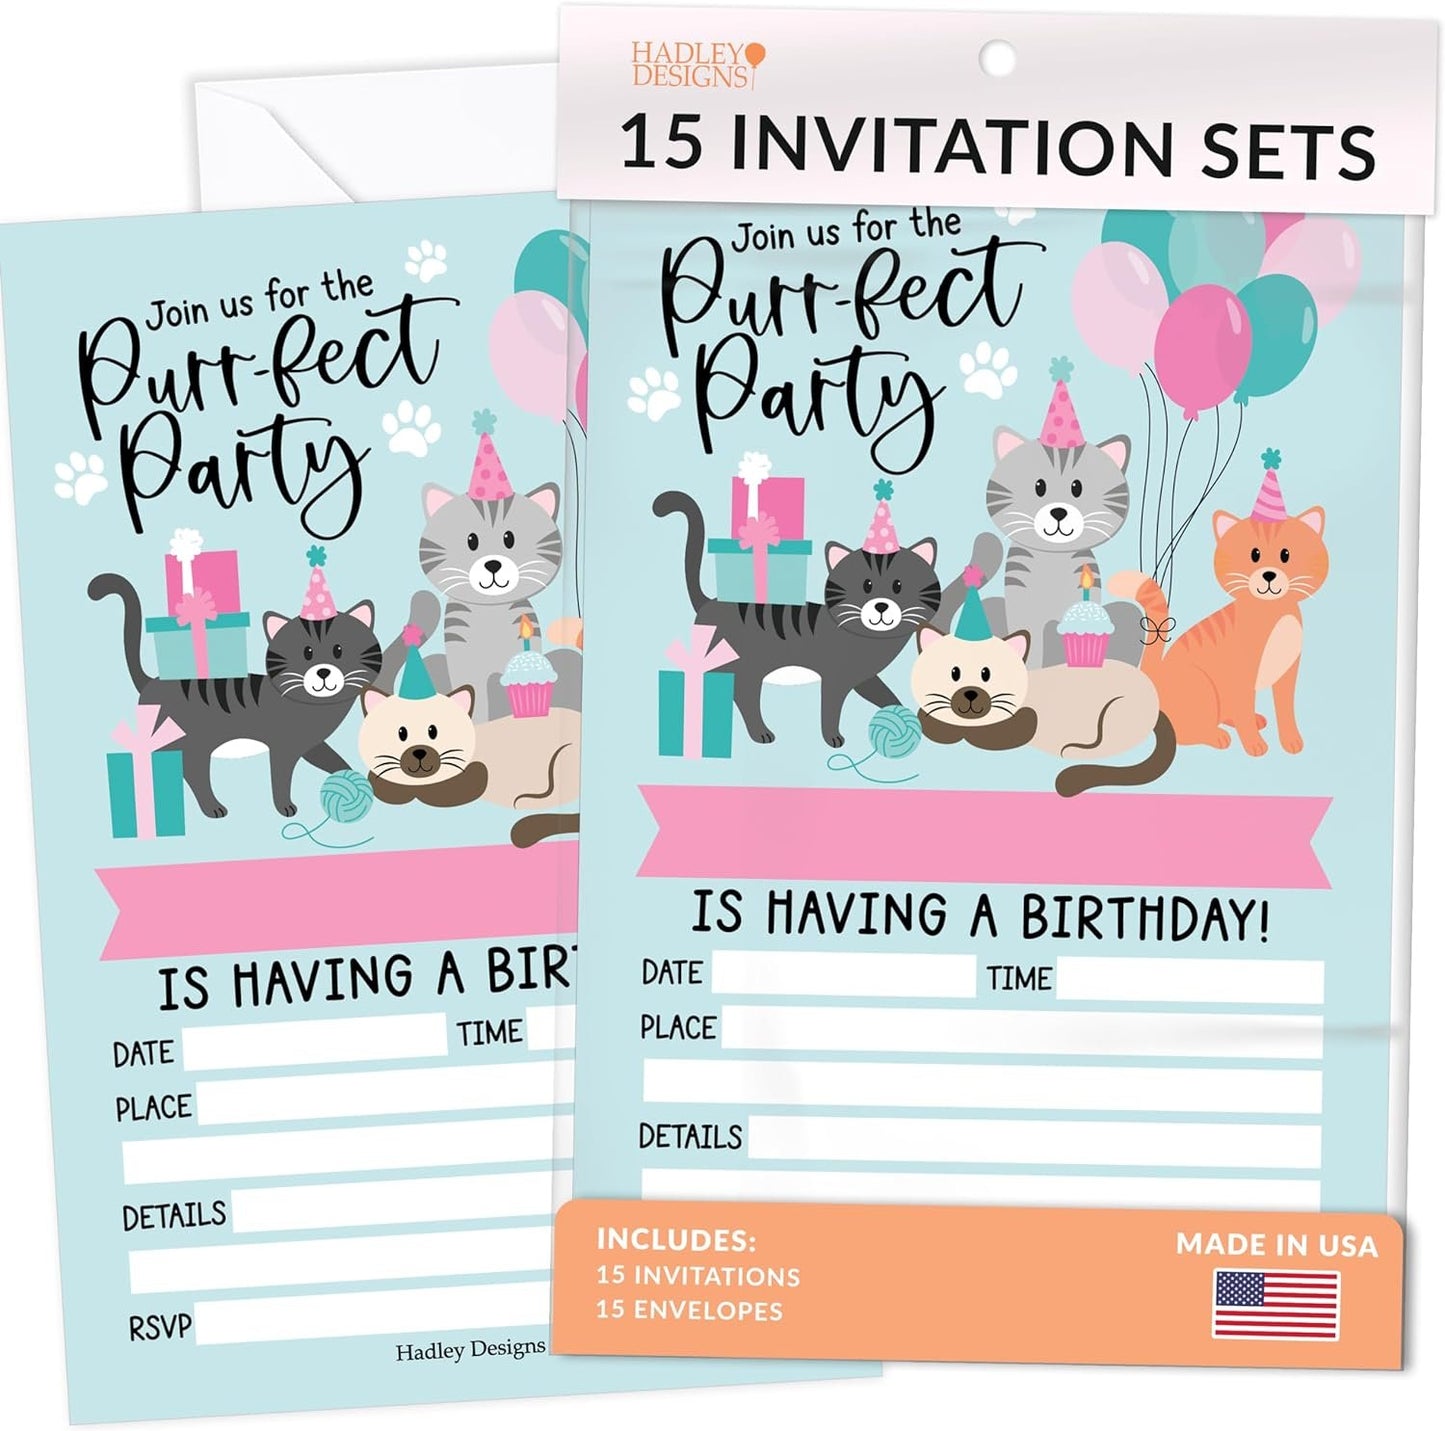 15 Kitty Cat Birthday Invitations Girl - Cat Birthday Party Invitations For Girls, Kitten Invitations For Birthday Party Invitation Girl, Invitation Cards Birthday Invite, Kids Birthday Invitations